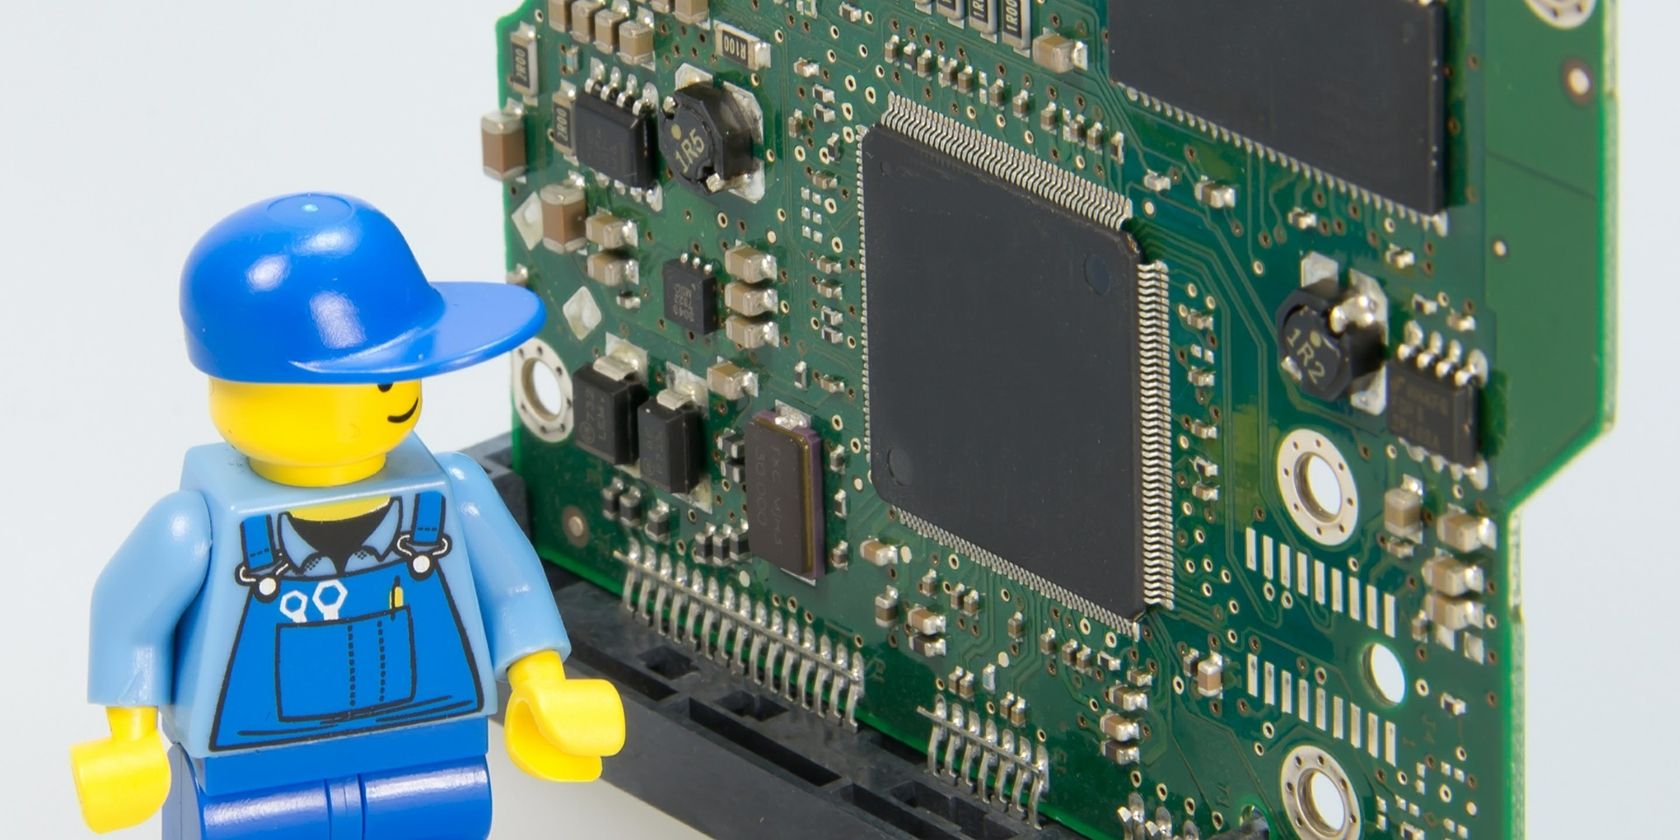 Miner figurine beside a motherboard.